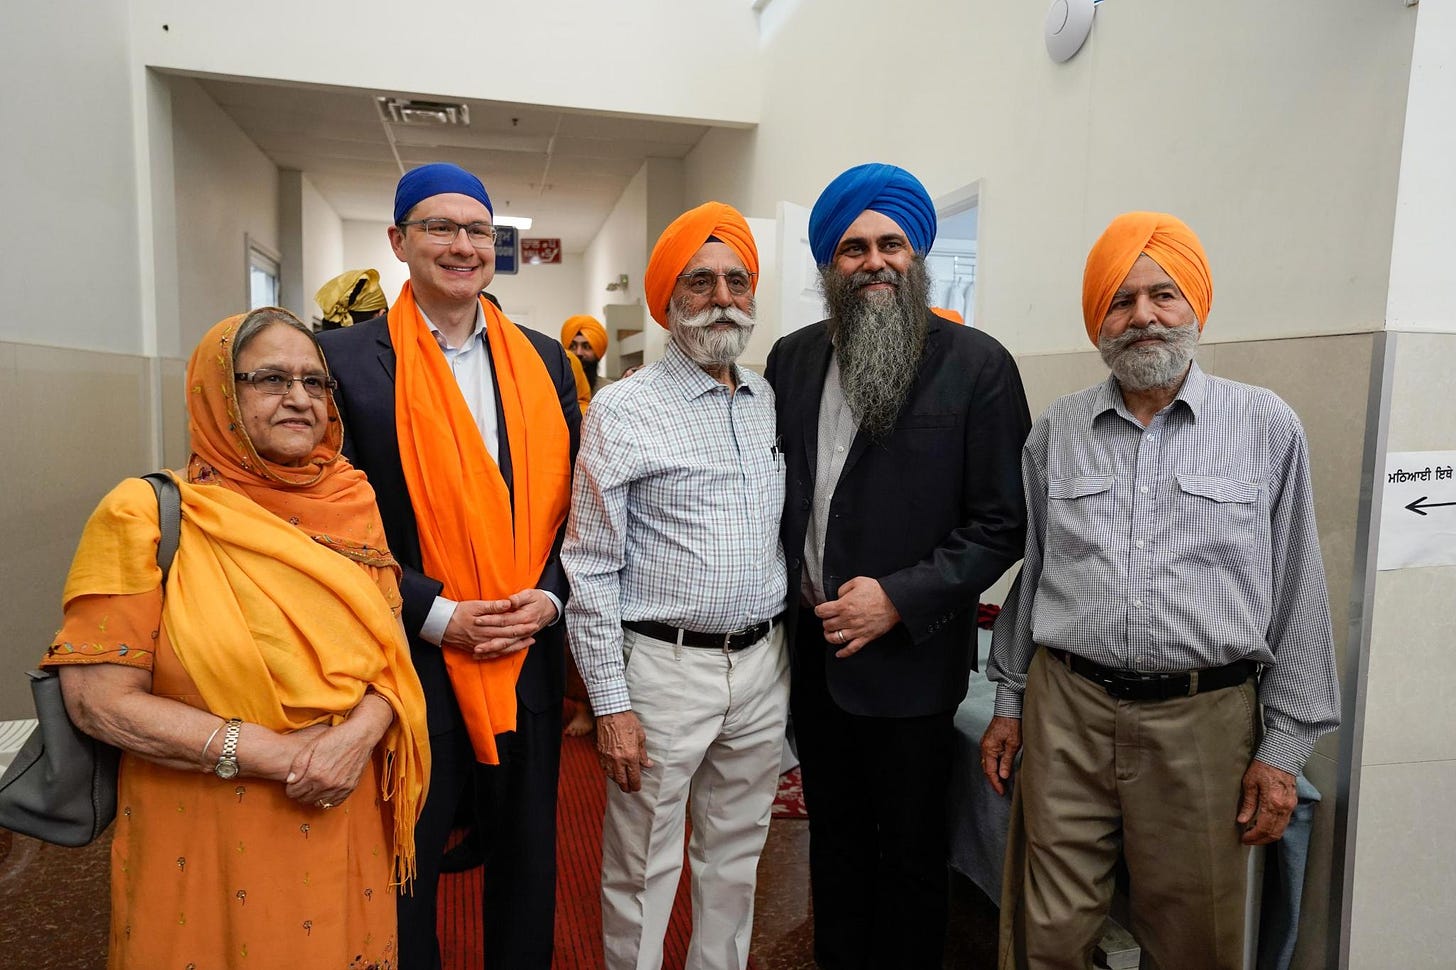 Pierre Poilievre on X: "Another great Vaisakhi celebration at the Dasmesh  Darbar Gurdwara in Brampton with the Sikh community. Happy #Vaisakhi!  https://t.co/pqxRPuuJK9" / X